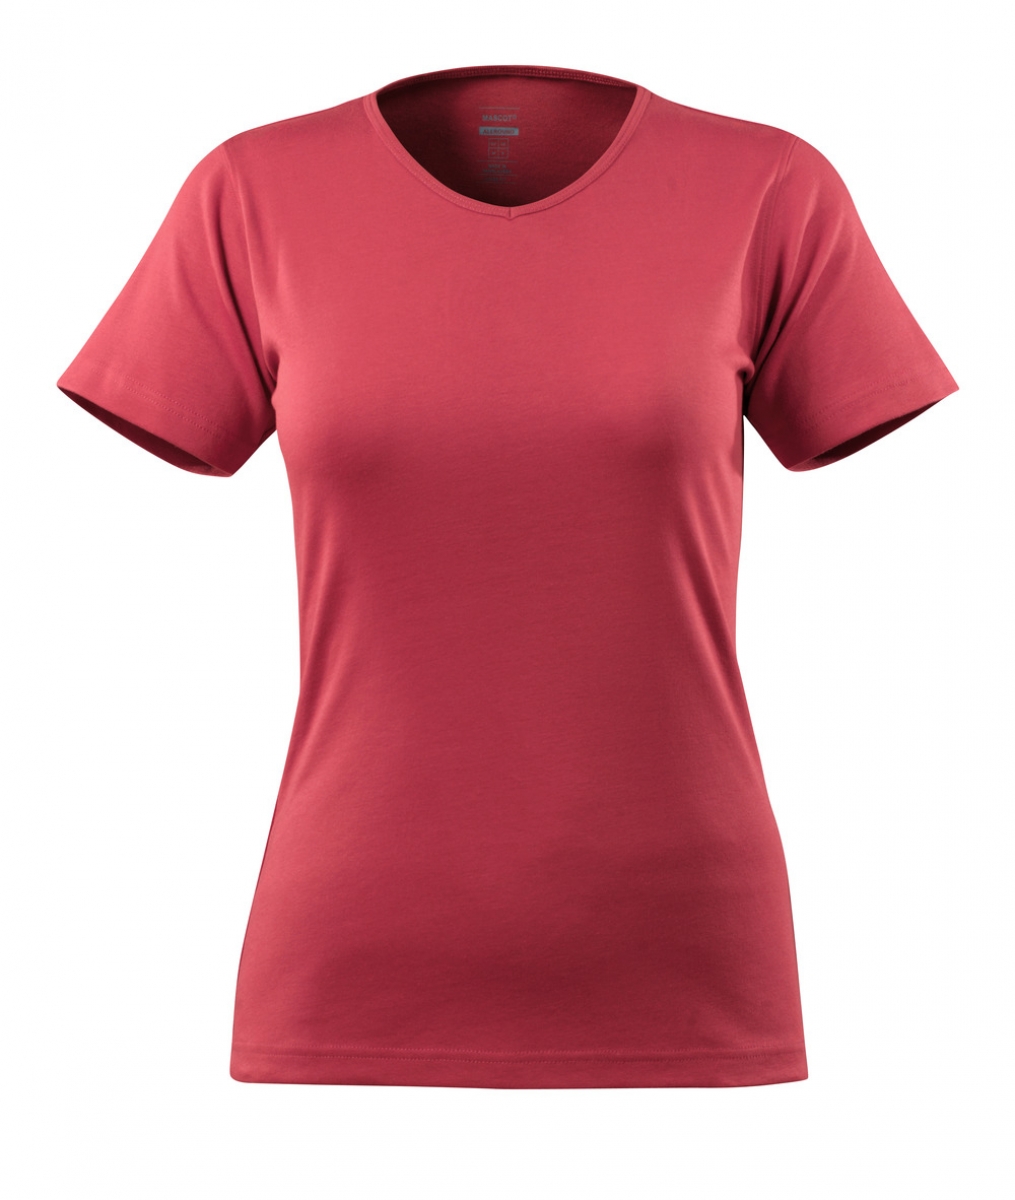 MASCOT-Worker-Shirts, Damen-T-Shirt, Nice, 220 g/m, himbeerrot